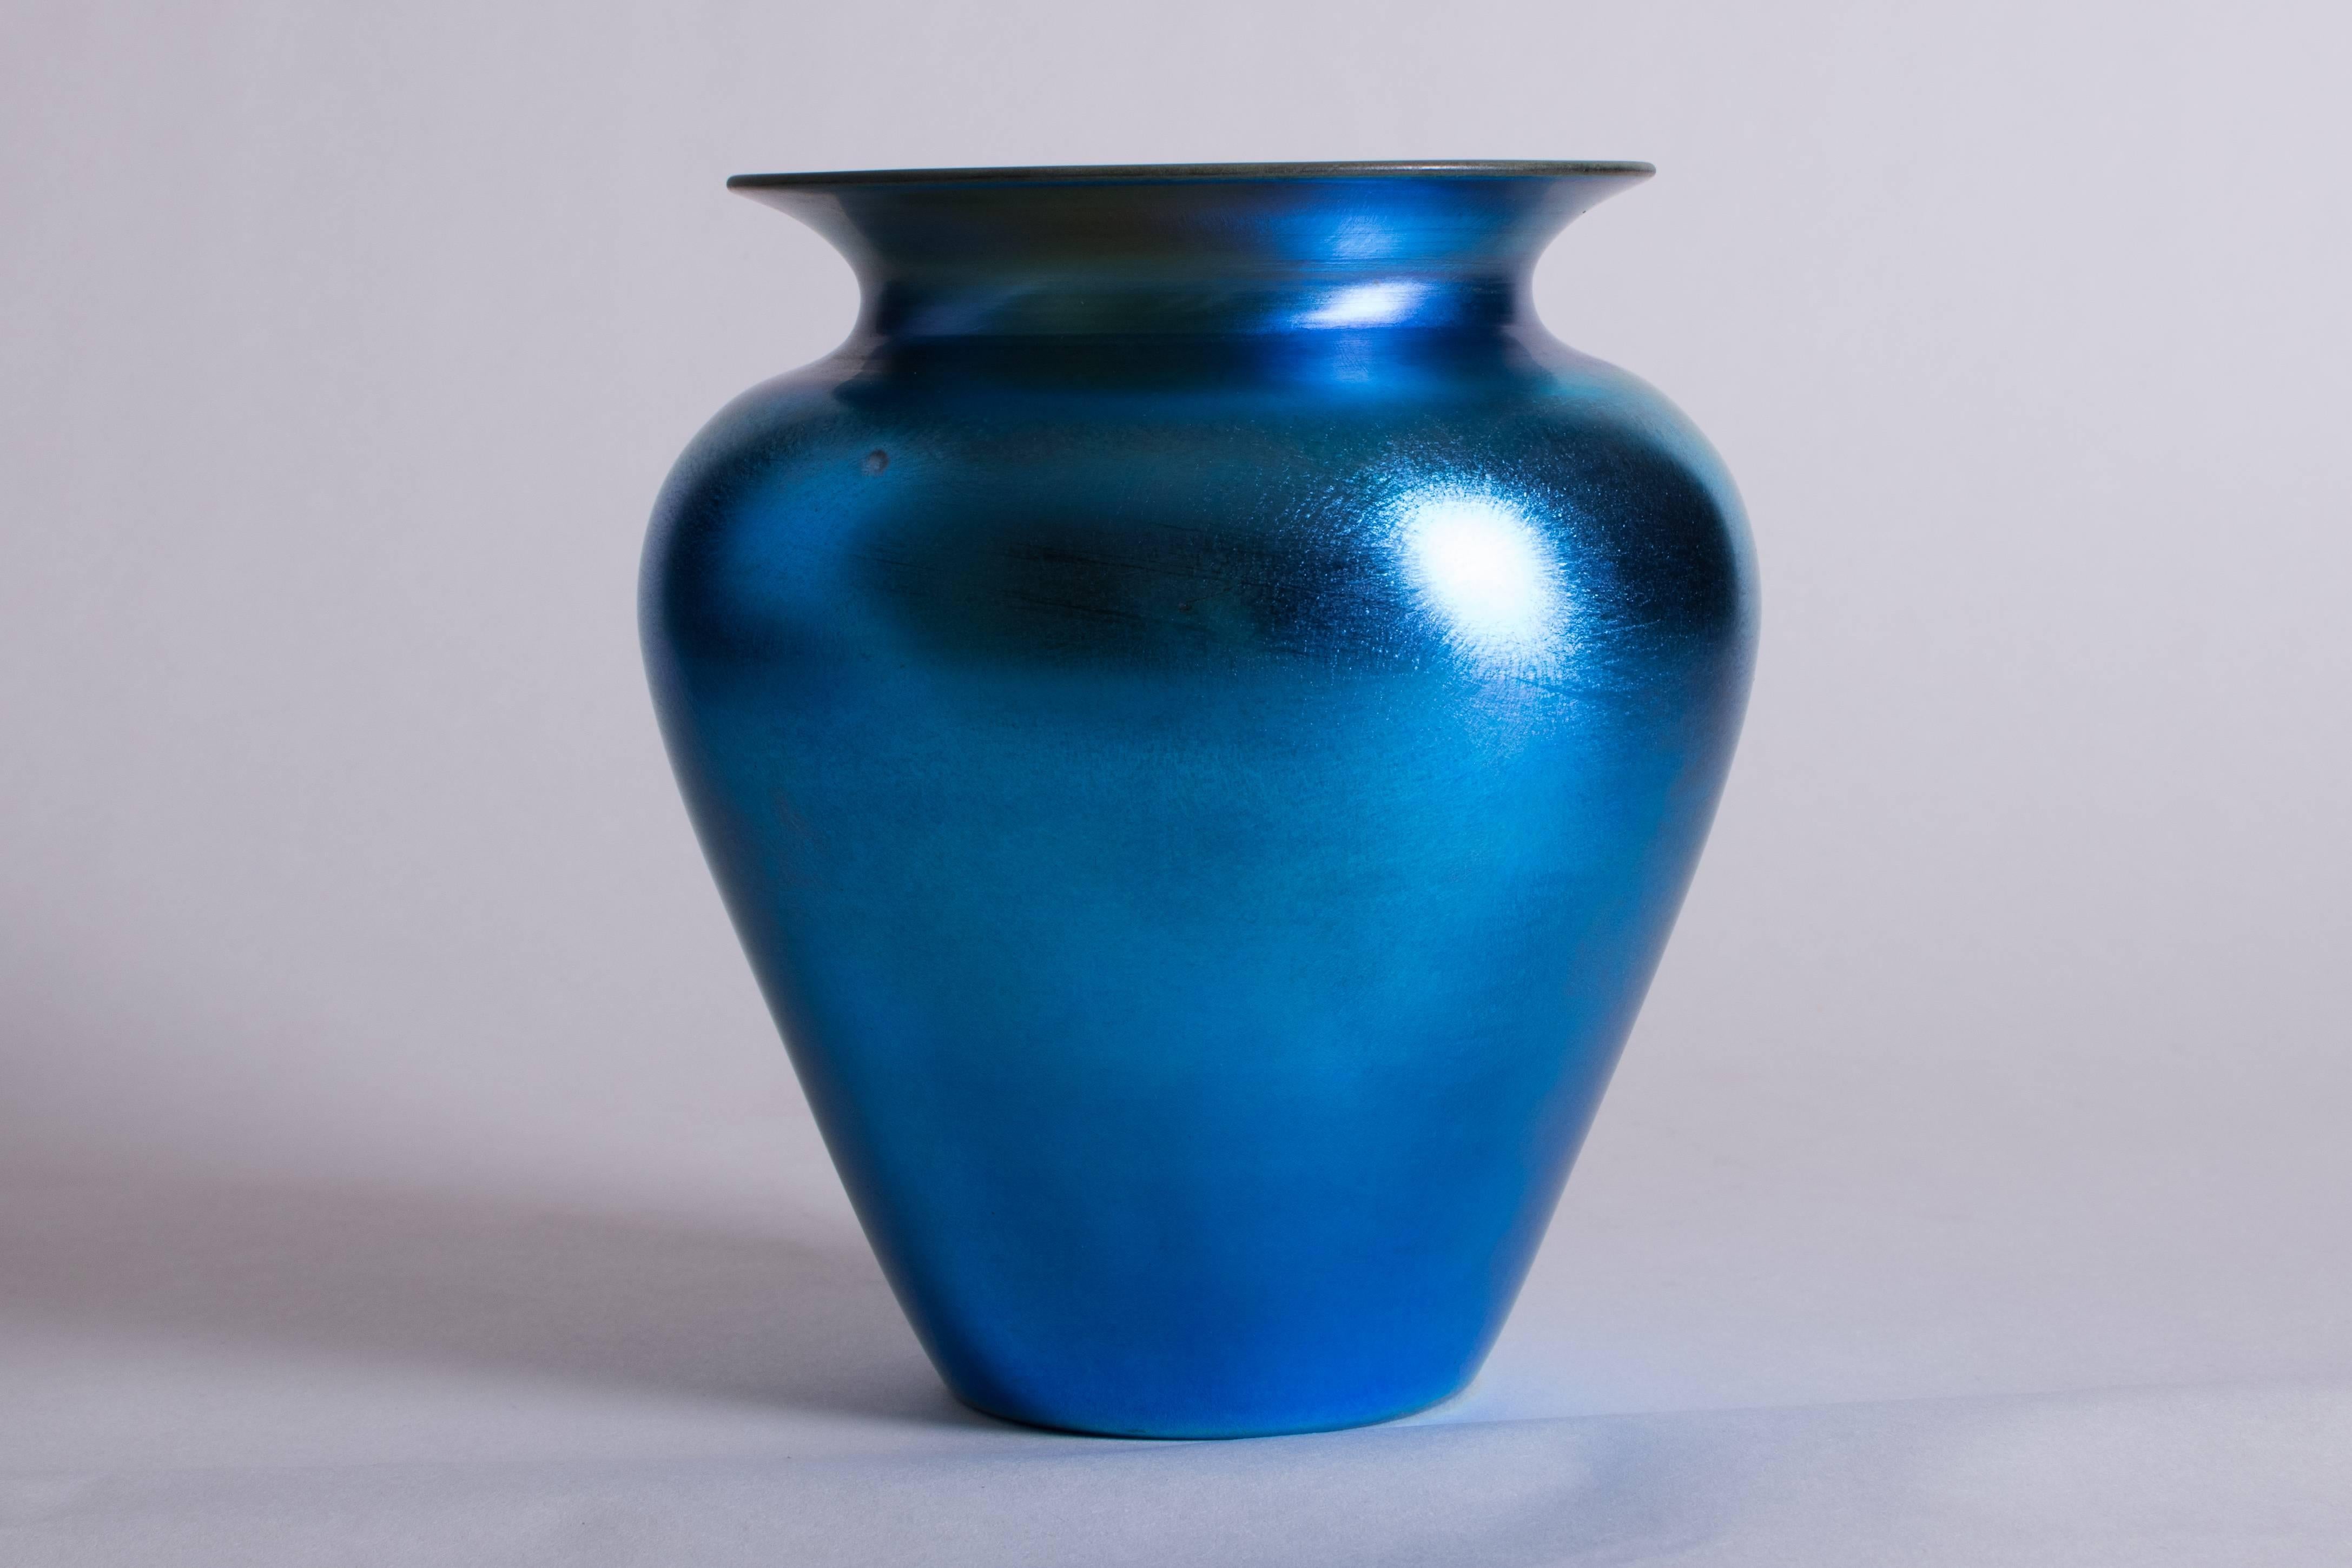 Durand blue iridescent vase
6 ¾